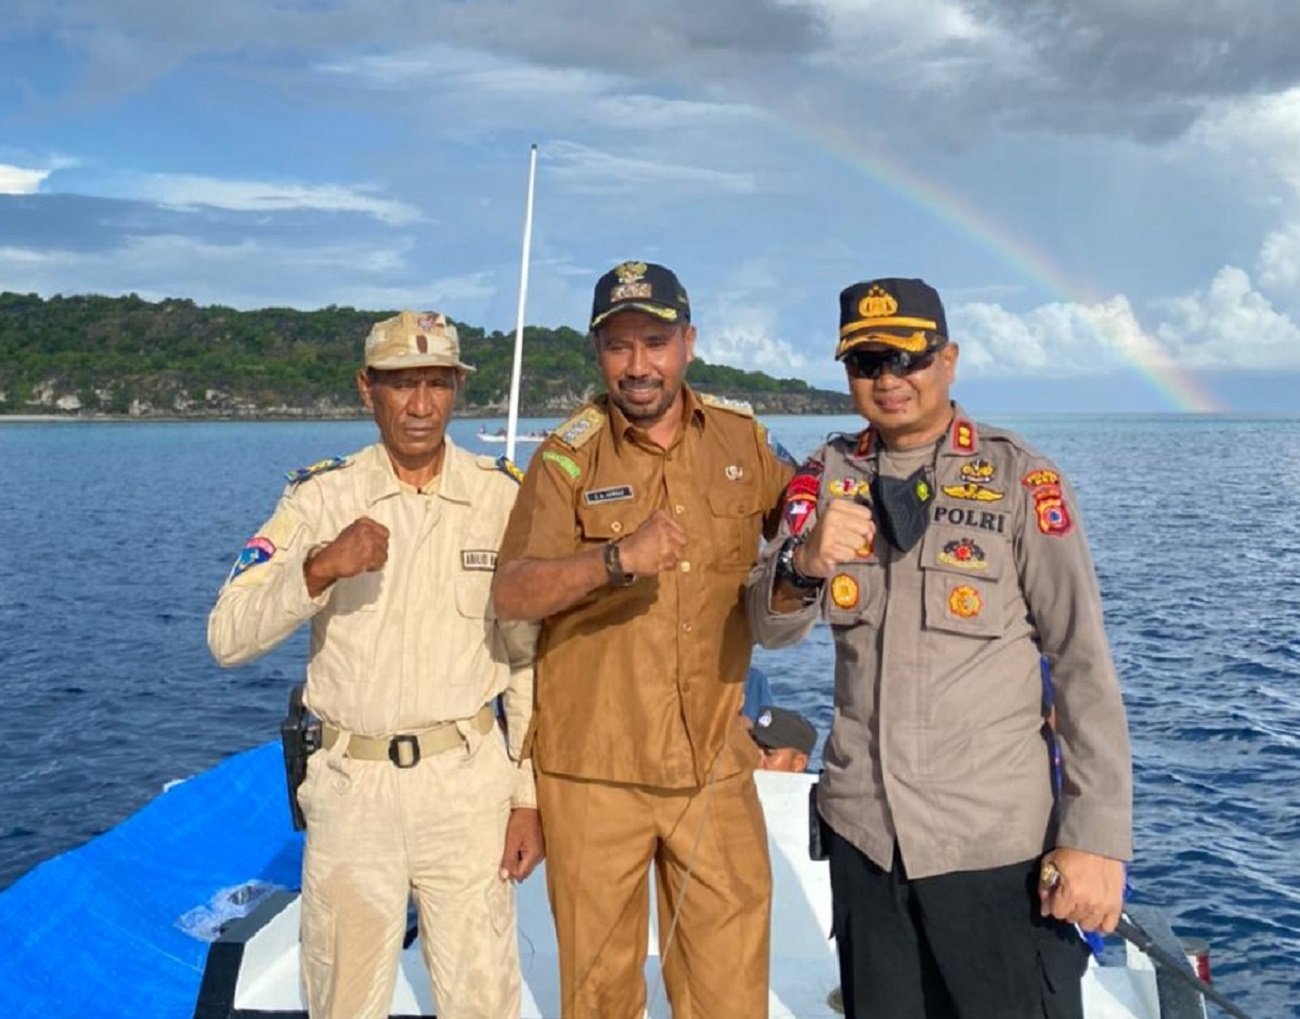 Kapolres MBD, AKBP Dwi Bachtiar Rivai didampingi Camat Wetar Barat, Brig Satpolair Polda Maluku, saat melaksanakan patroli keamanan hingga perbatasan laut antara negara Indonesia dengan Timor Leste.